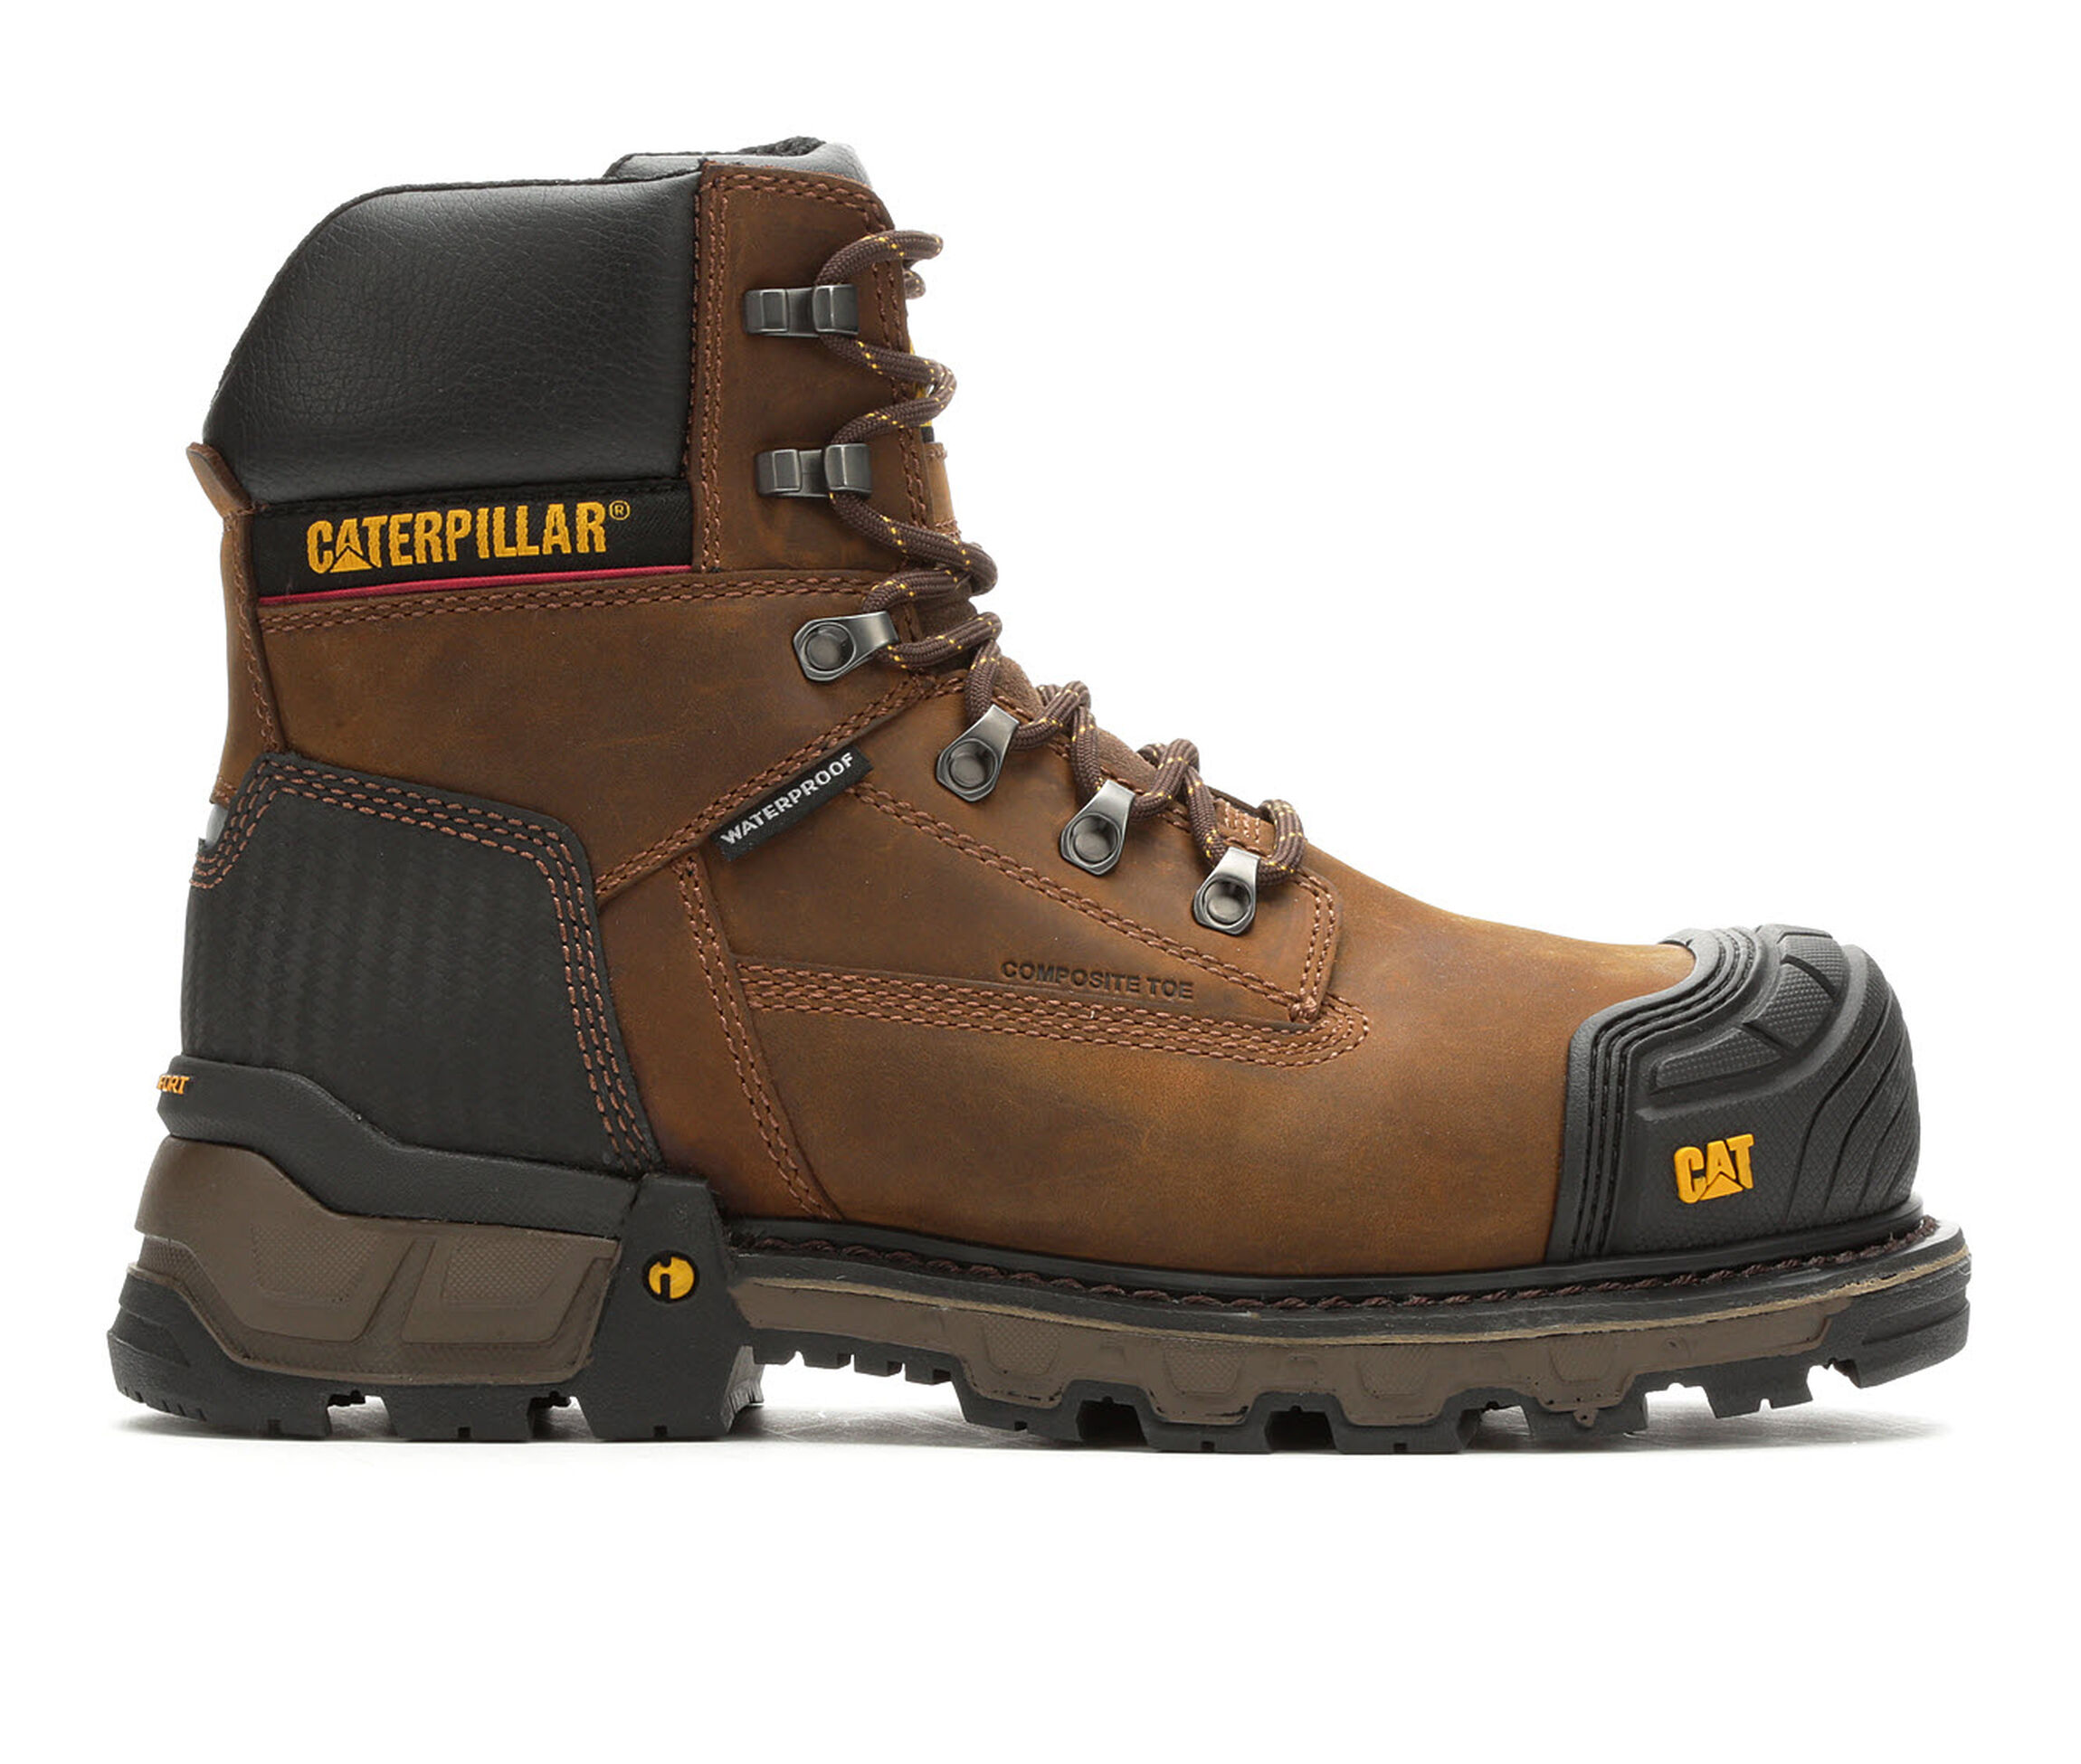 Caterpillar Excavator 6-inch Waterproof Composite Toe Men's Boots (Brown Faux Leather)